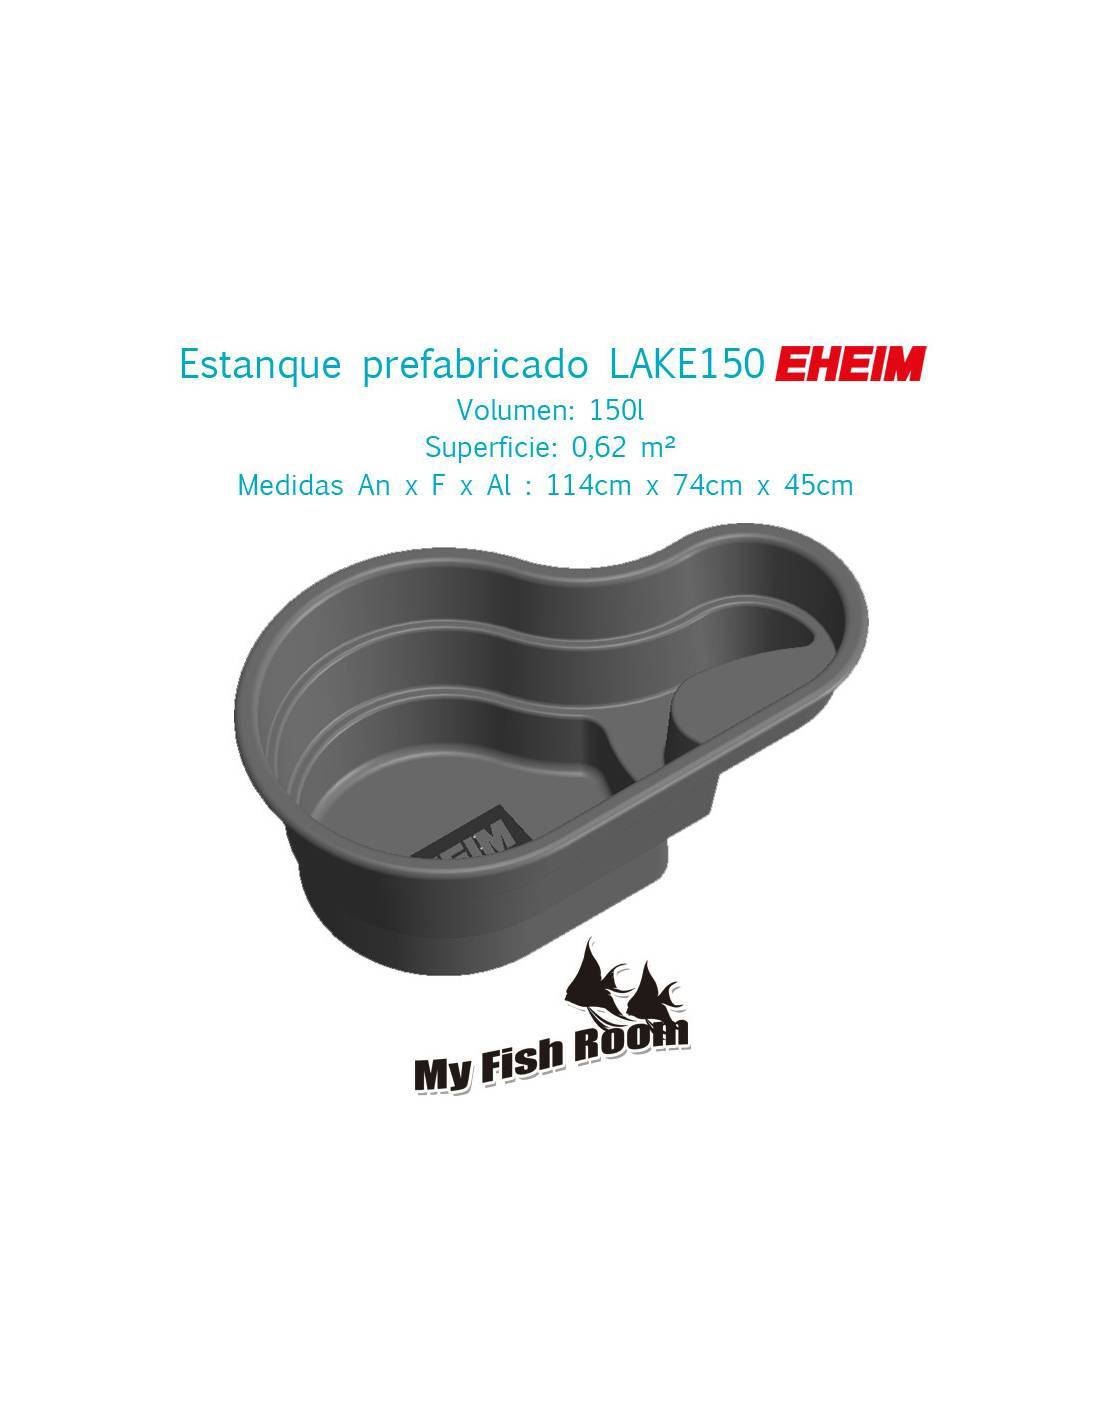 Estanque prefabricado 150 litros forma orgánica - EHEIM LAKE150